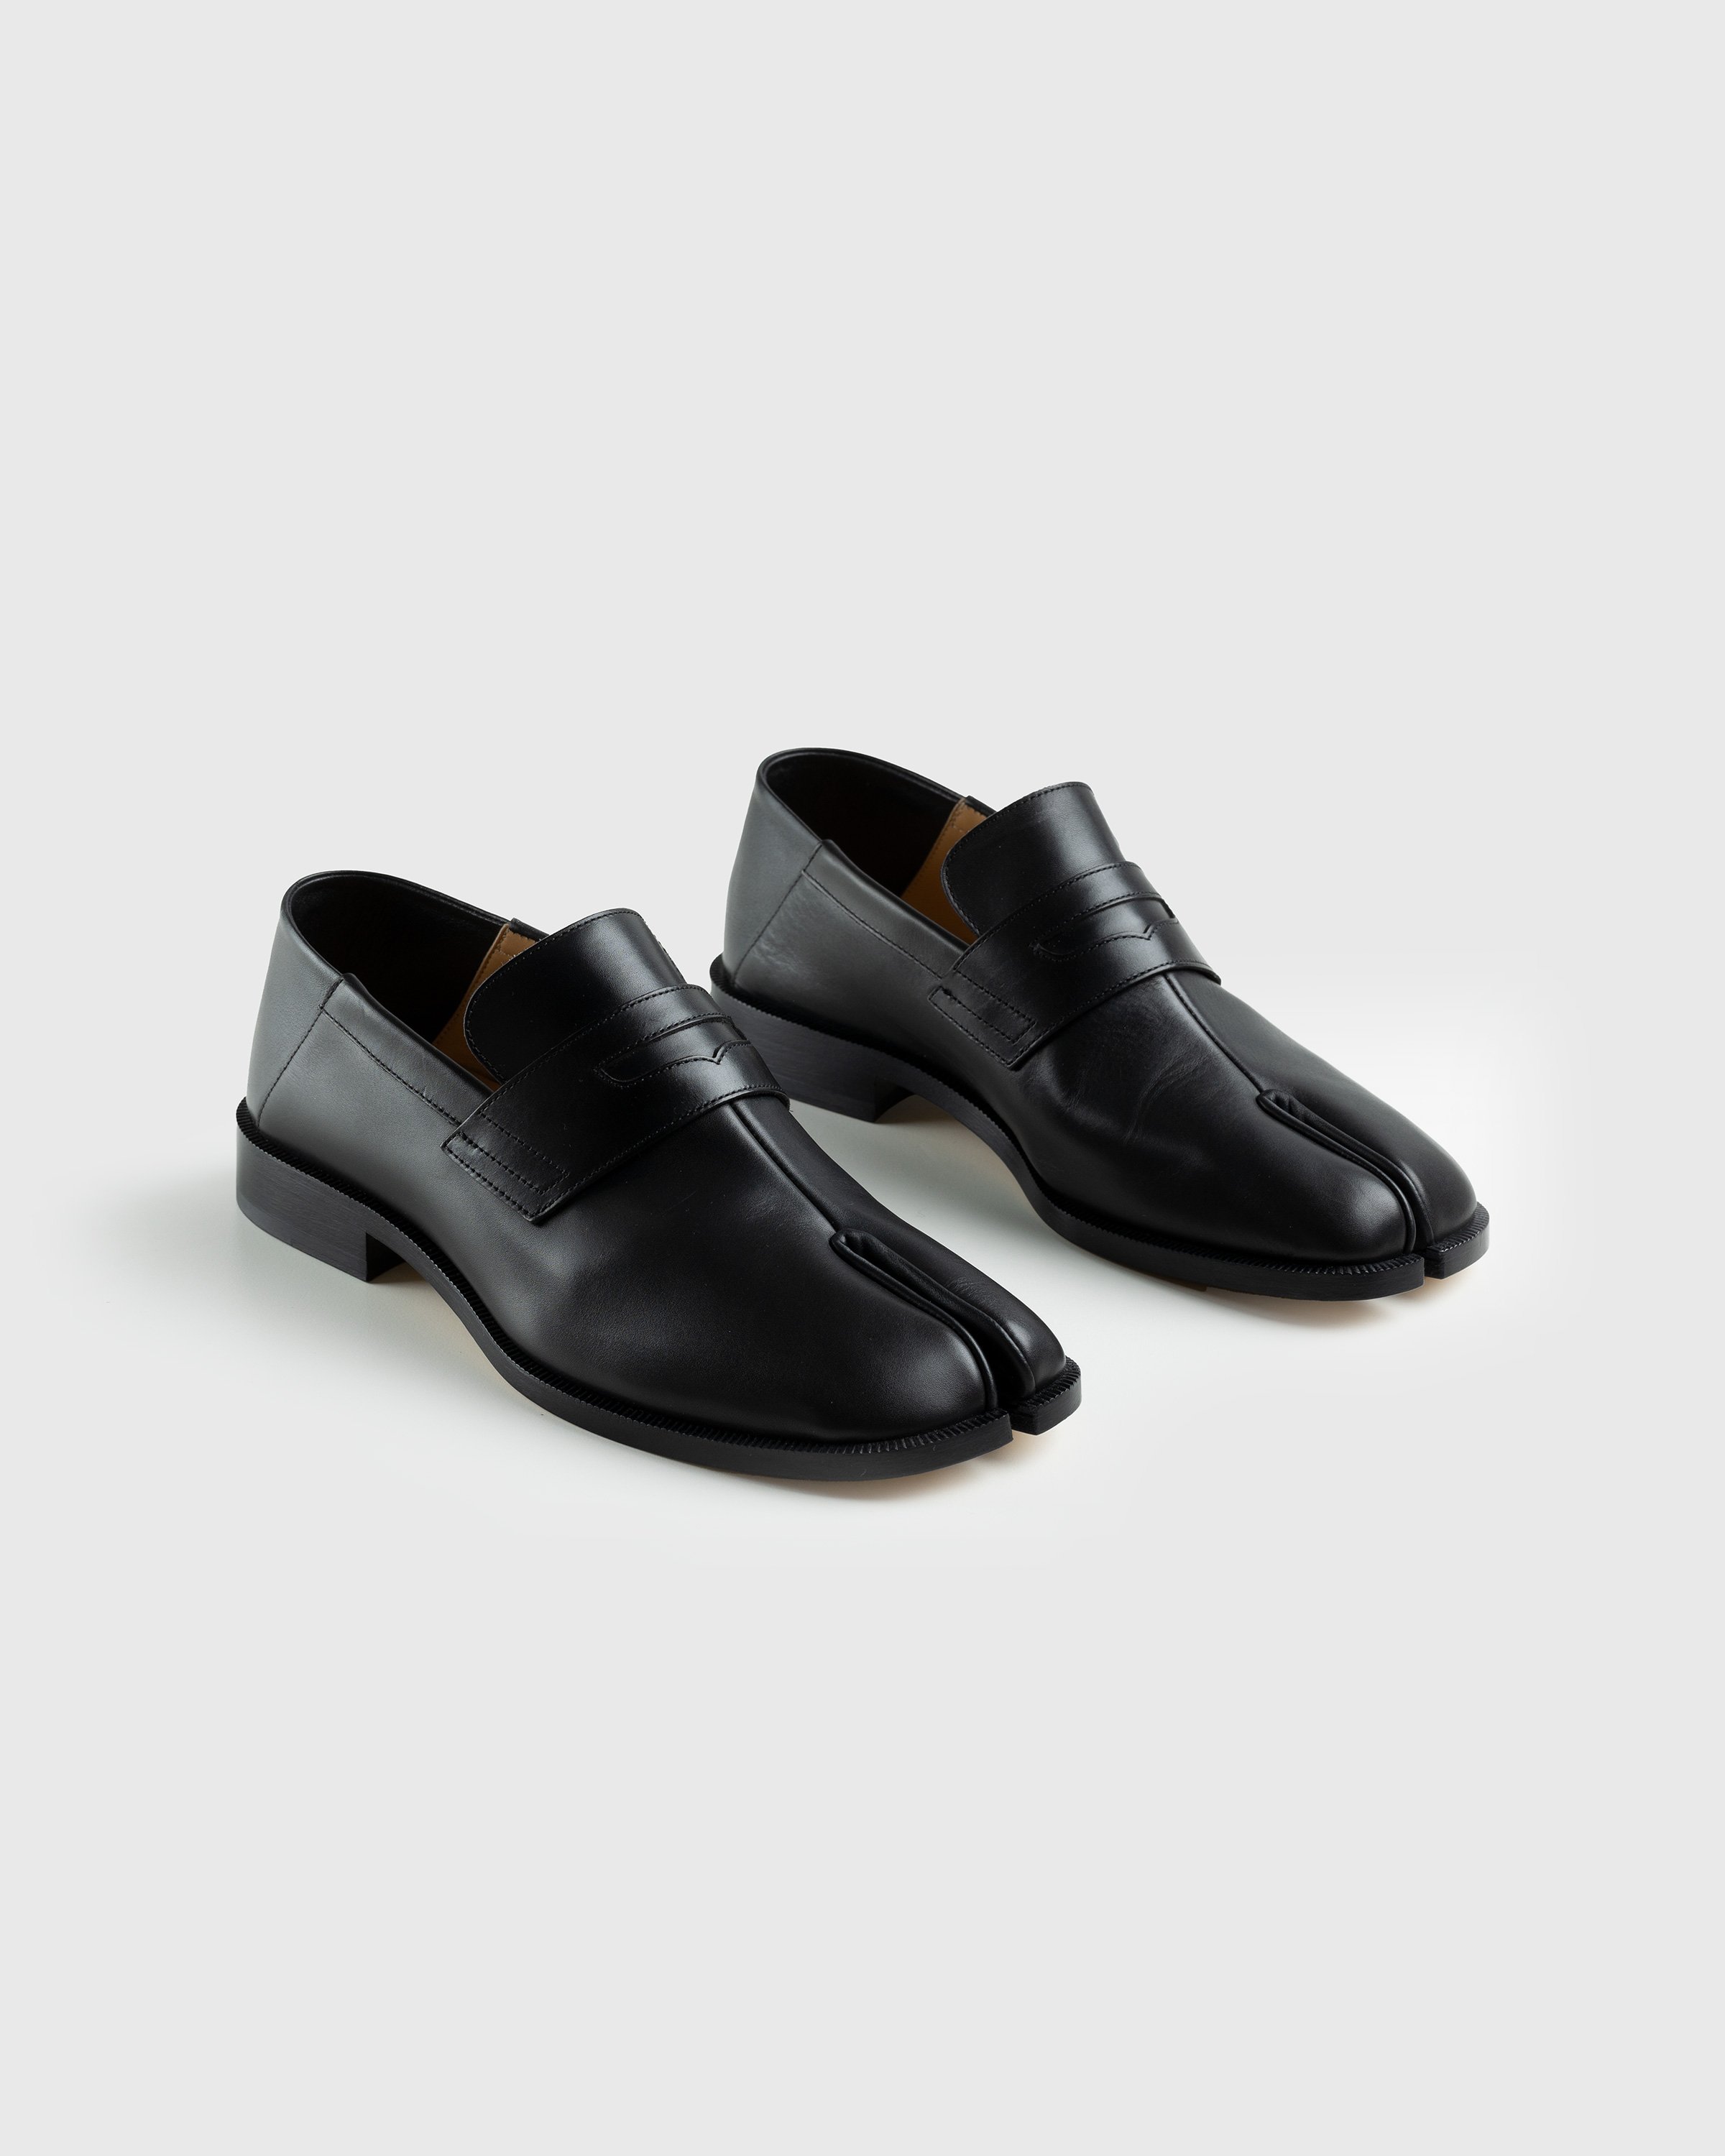 Maison Margiela - Tabi Loafer Babouche - Footwear - Black - Image 3